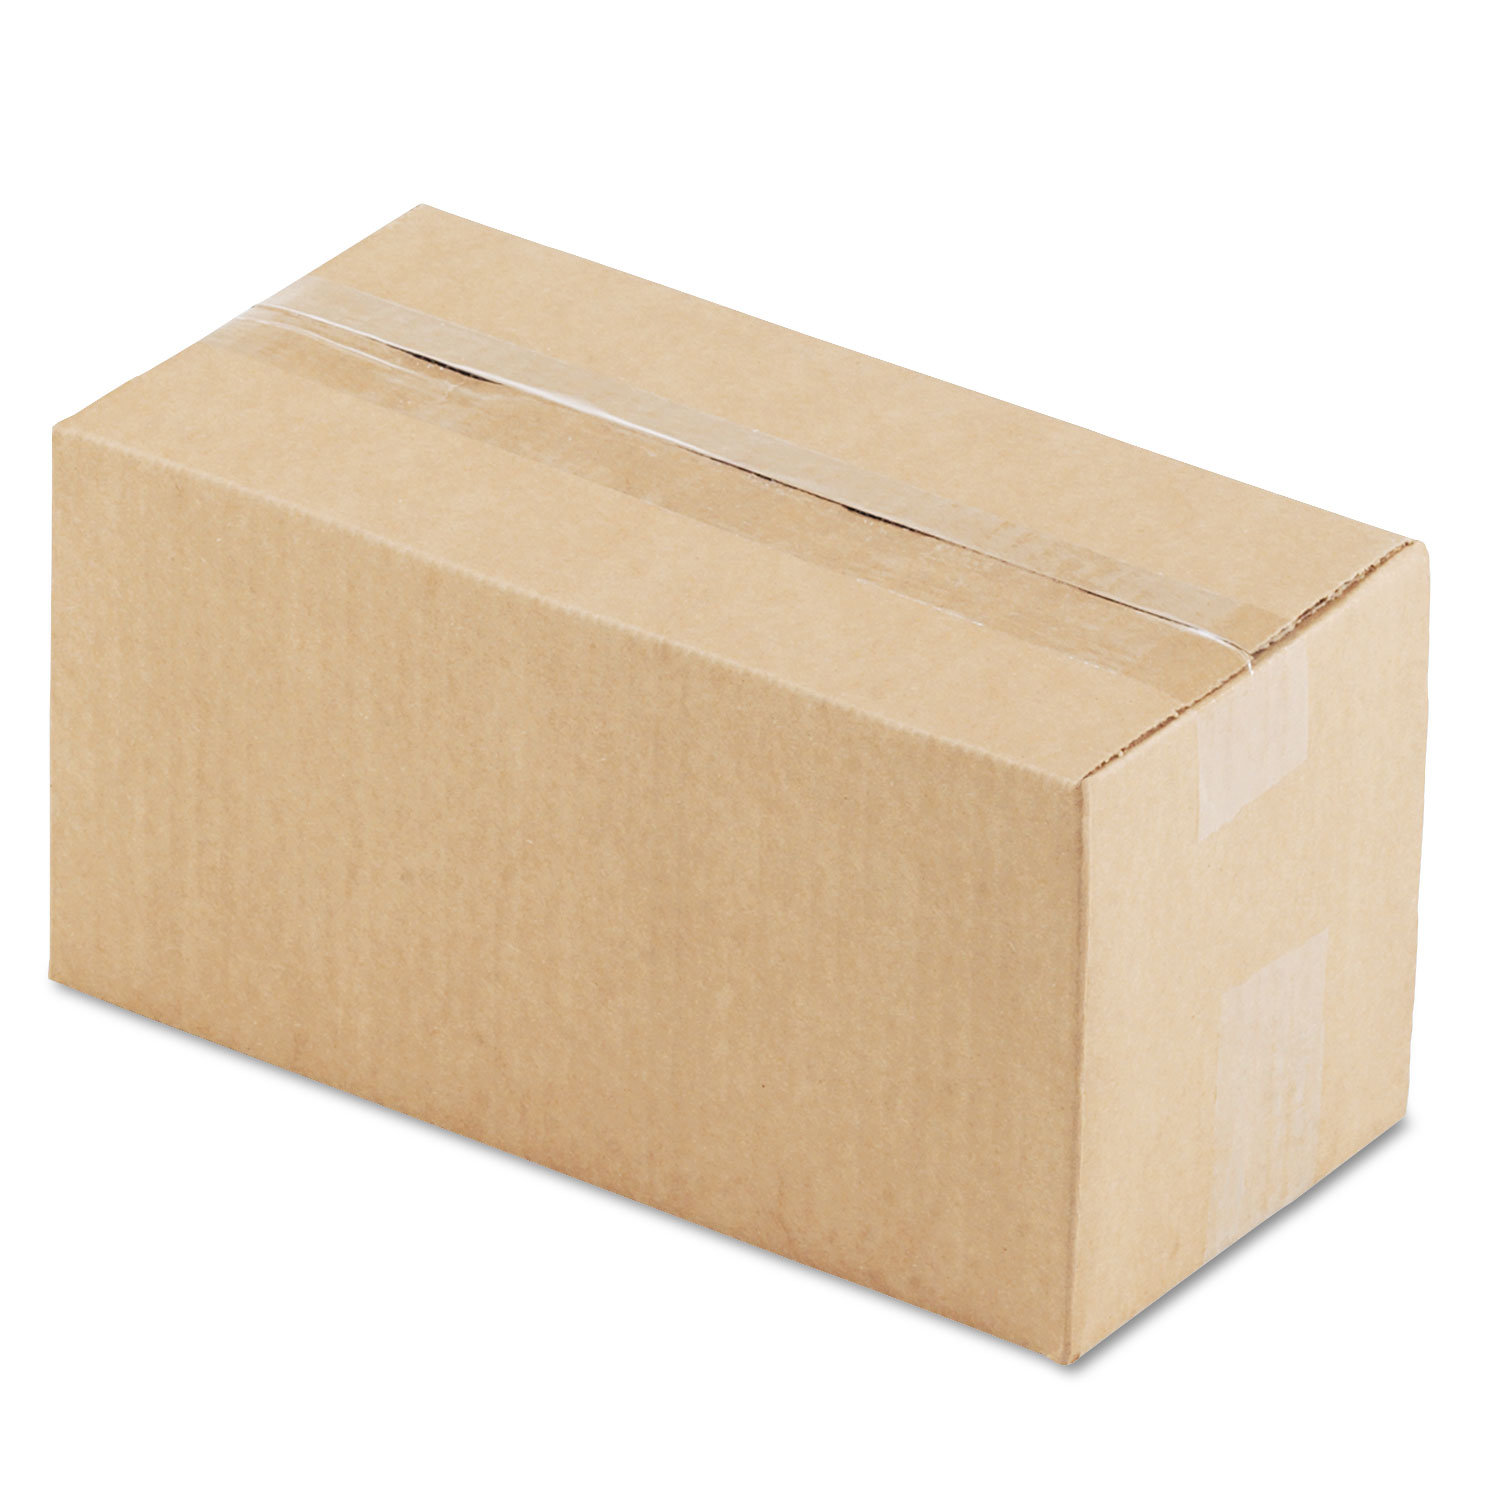 Brown Corrugated - Fixed-Depth Shipping Boxes, 12l x 6w x 6h, 25/Bundle